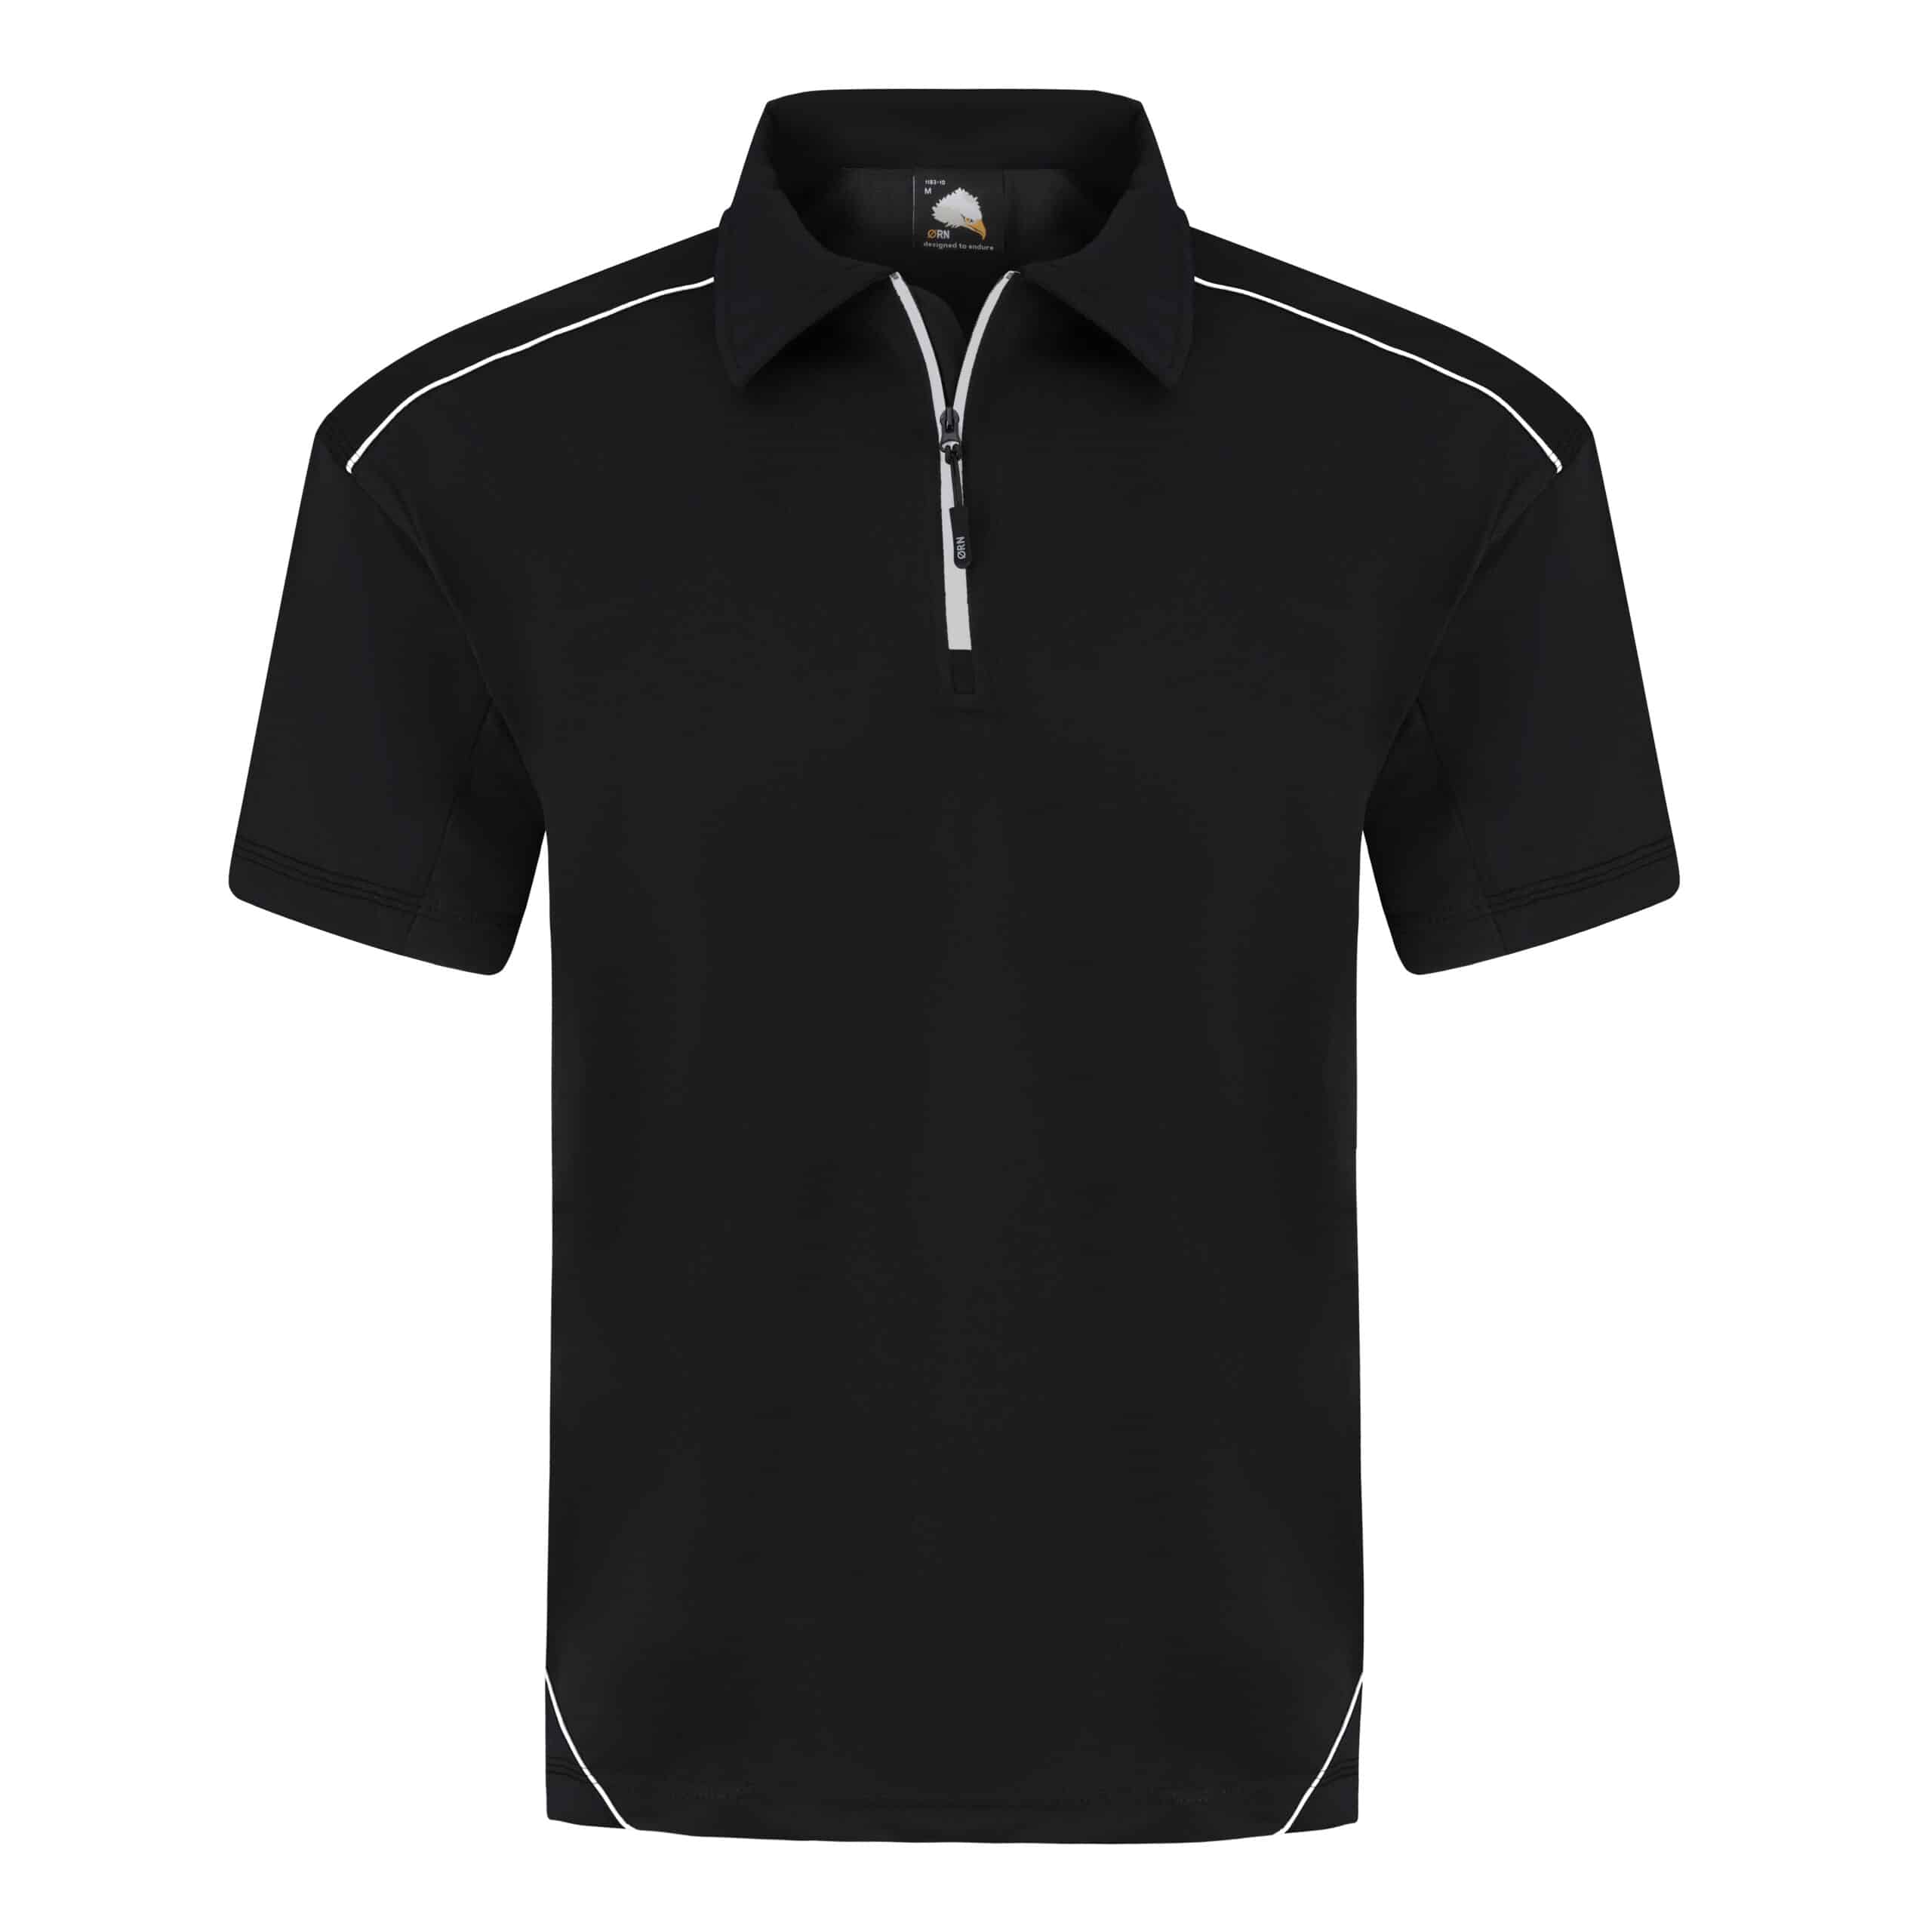 Orn Fireback Wicking Polo Shirt - Essential Workwear